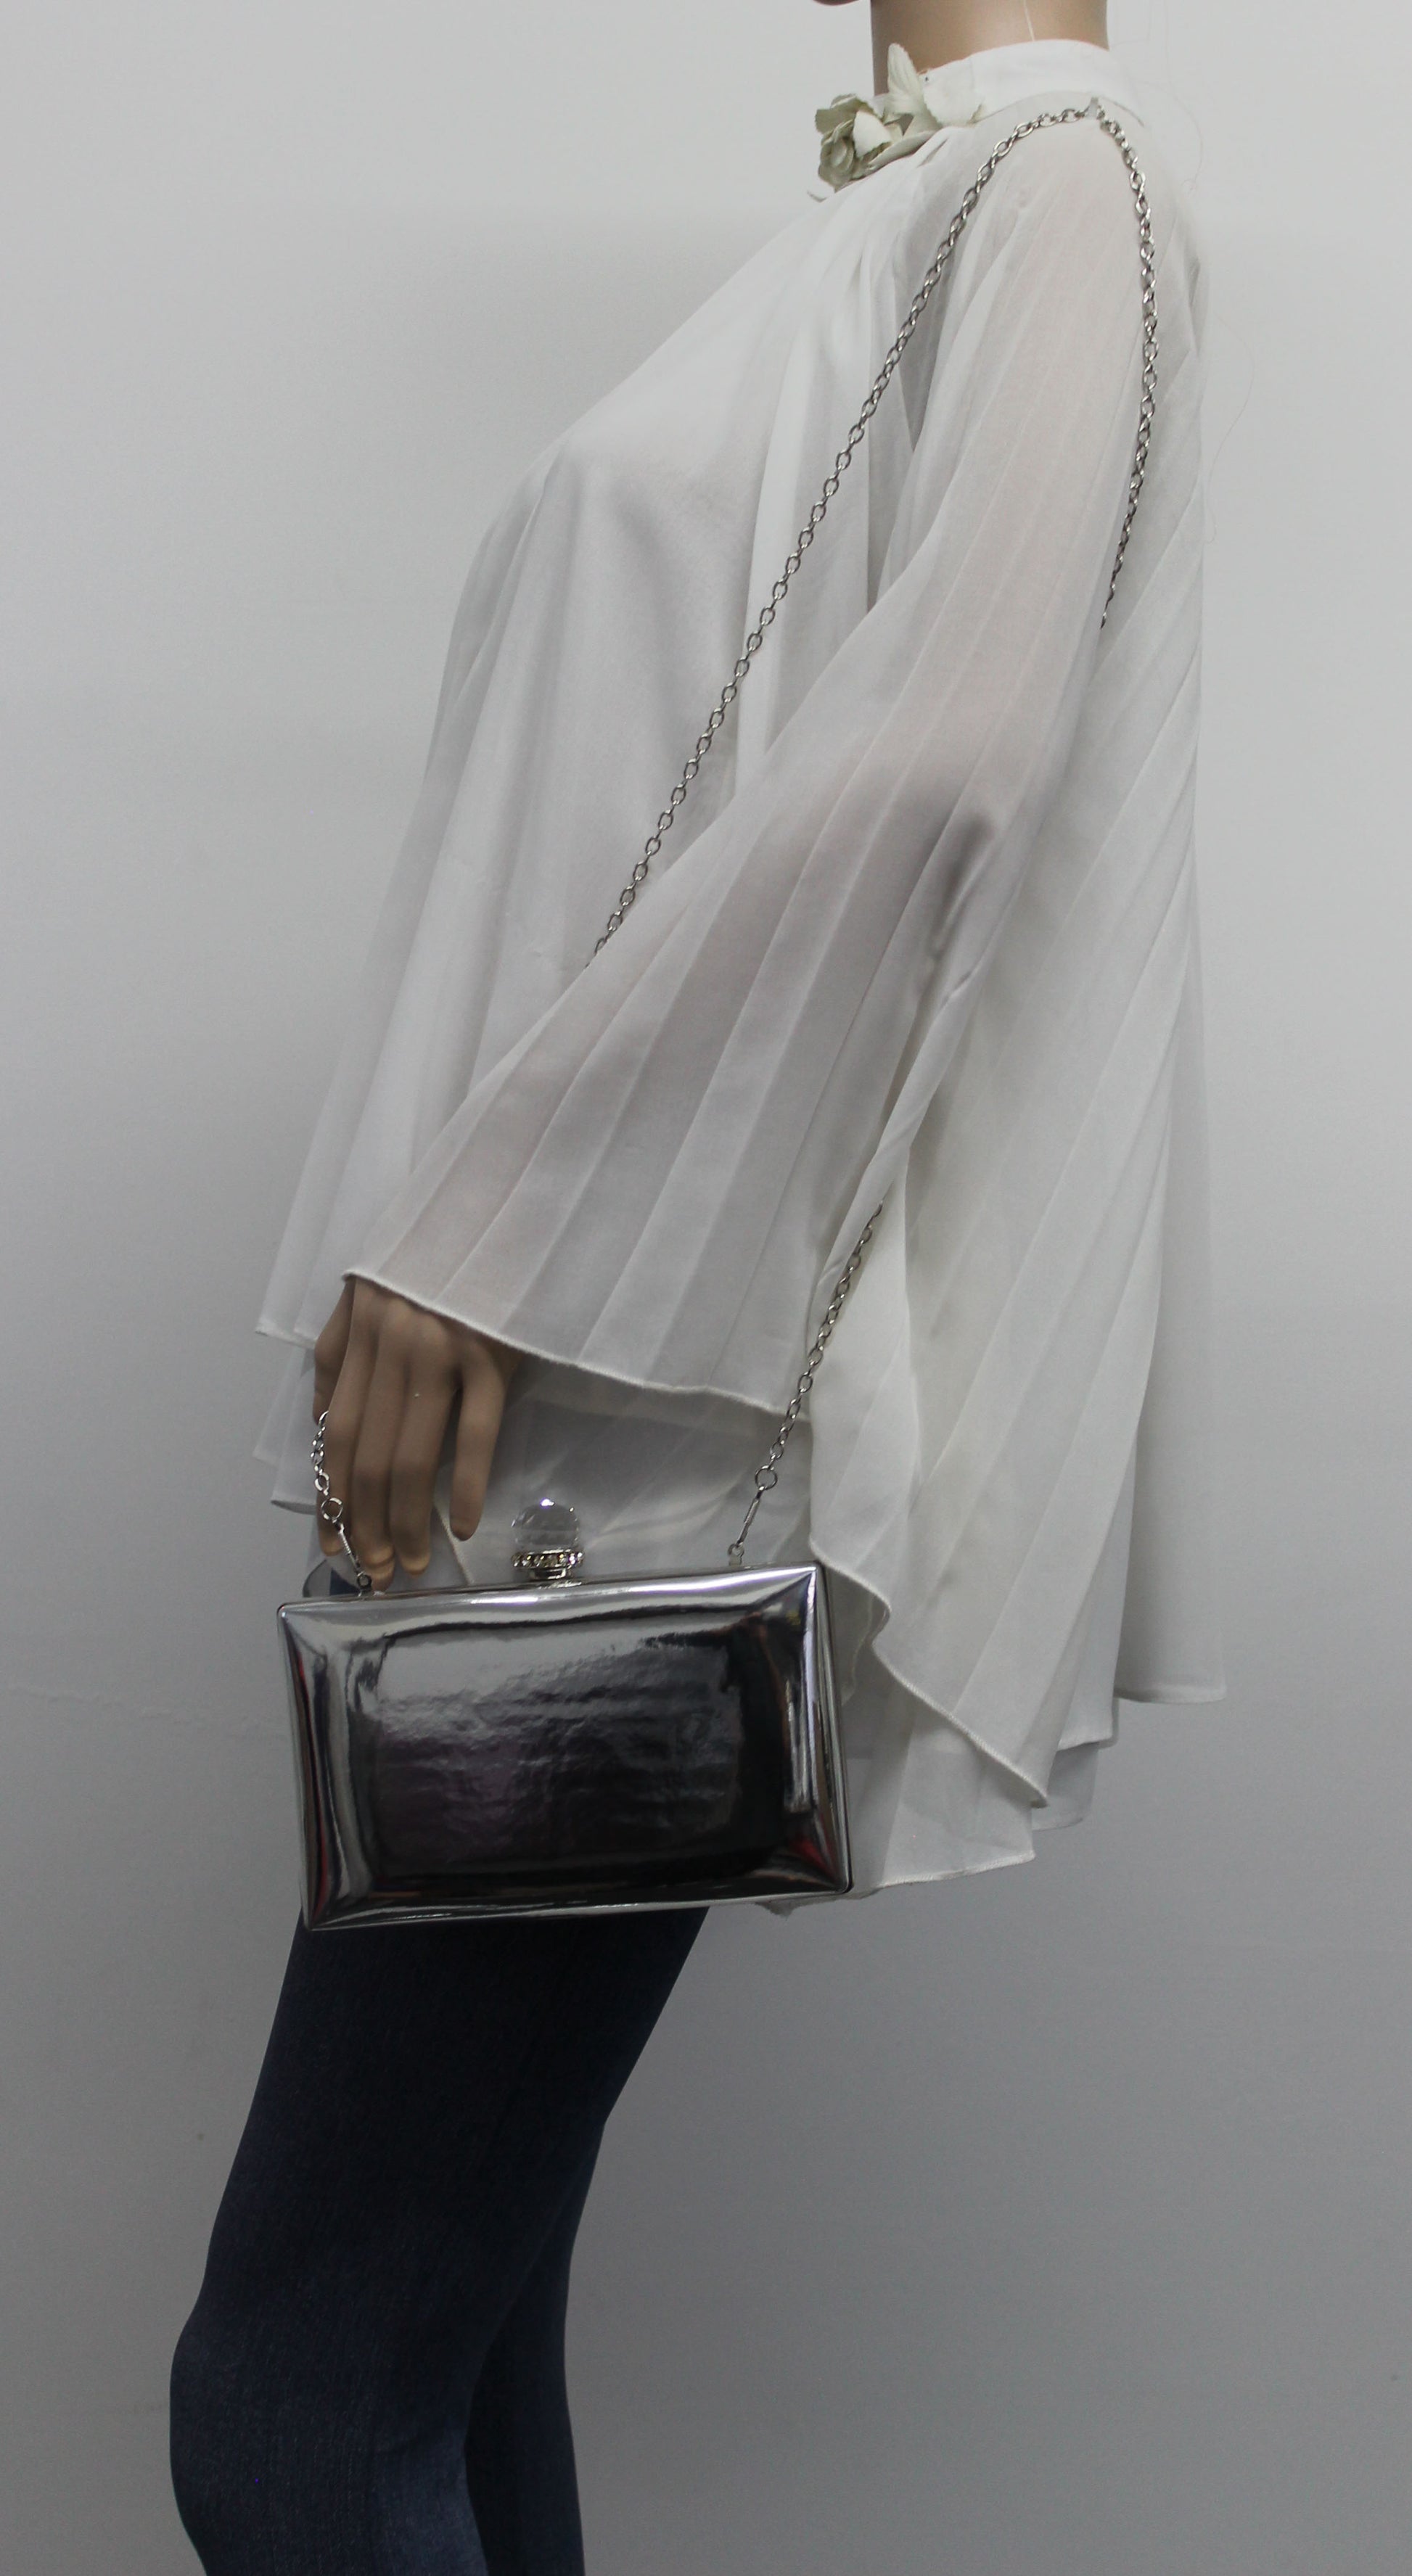 SWANKYSWANS Emilia Patent Clutch Bag Silver Cute Cheap Clutch Bag For Weddings School and Work